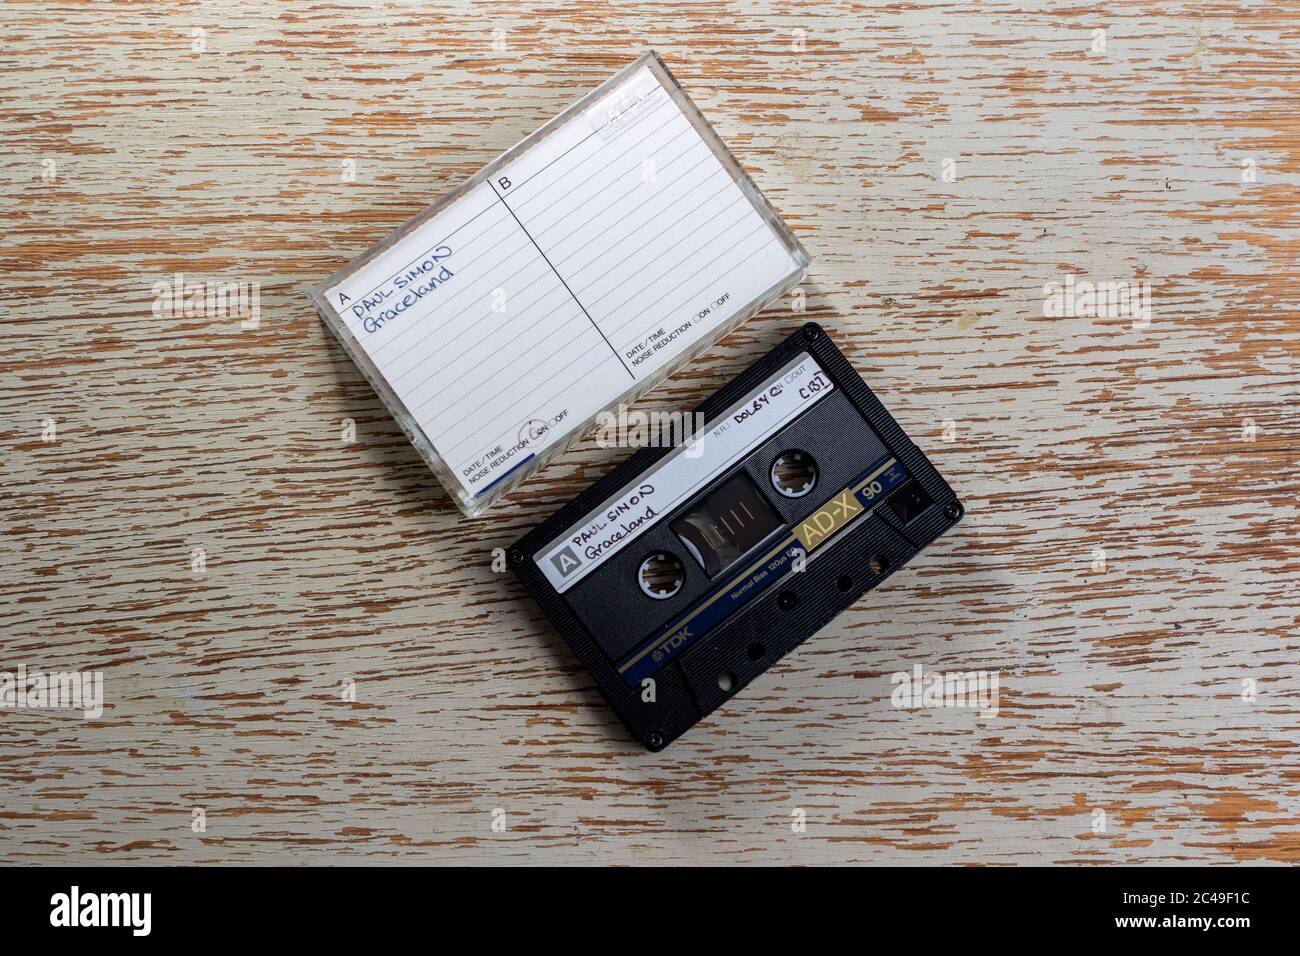 Home recording on a TDK cassette of Paul Simon's album Graceland. Stock Photo